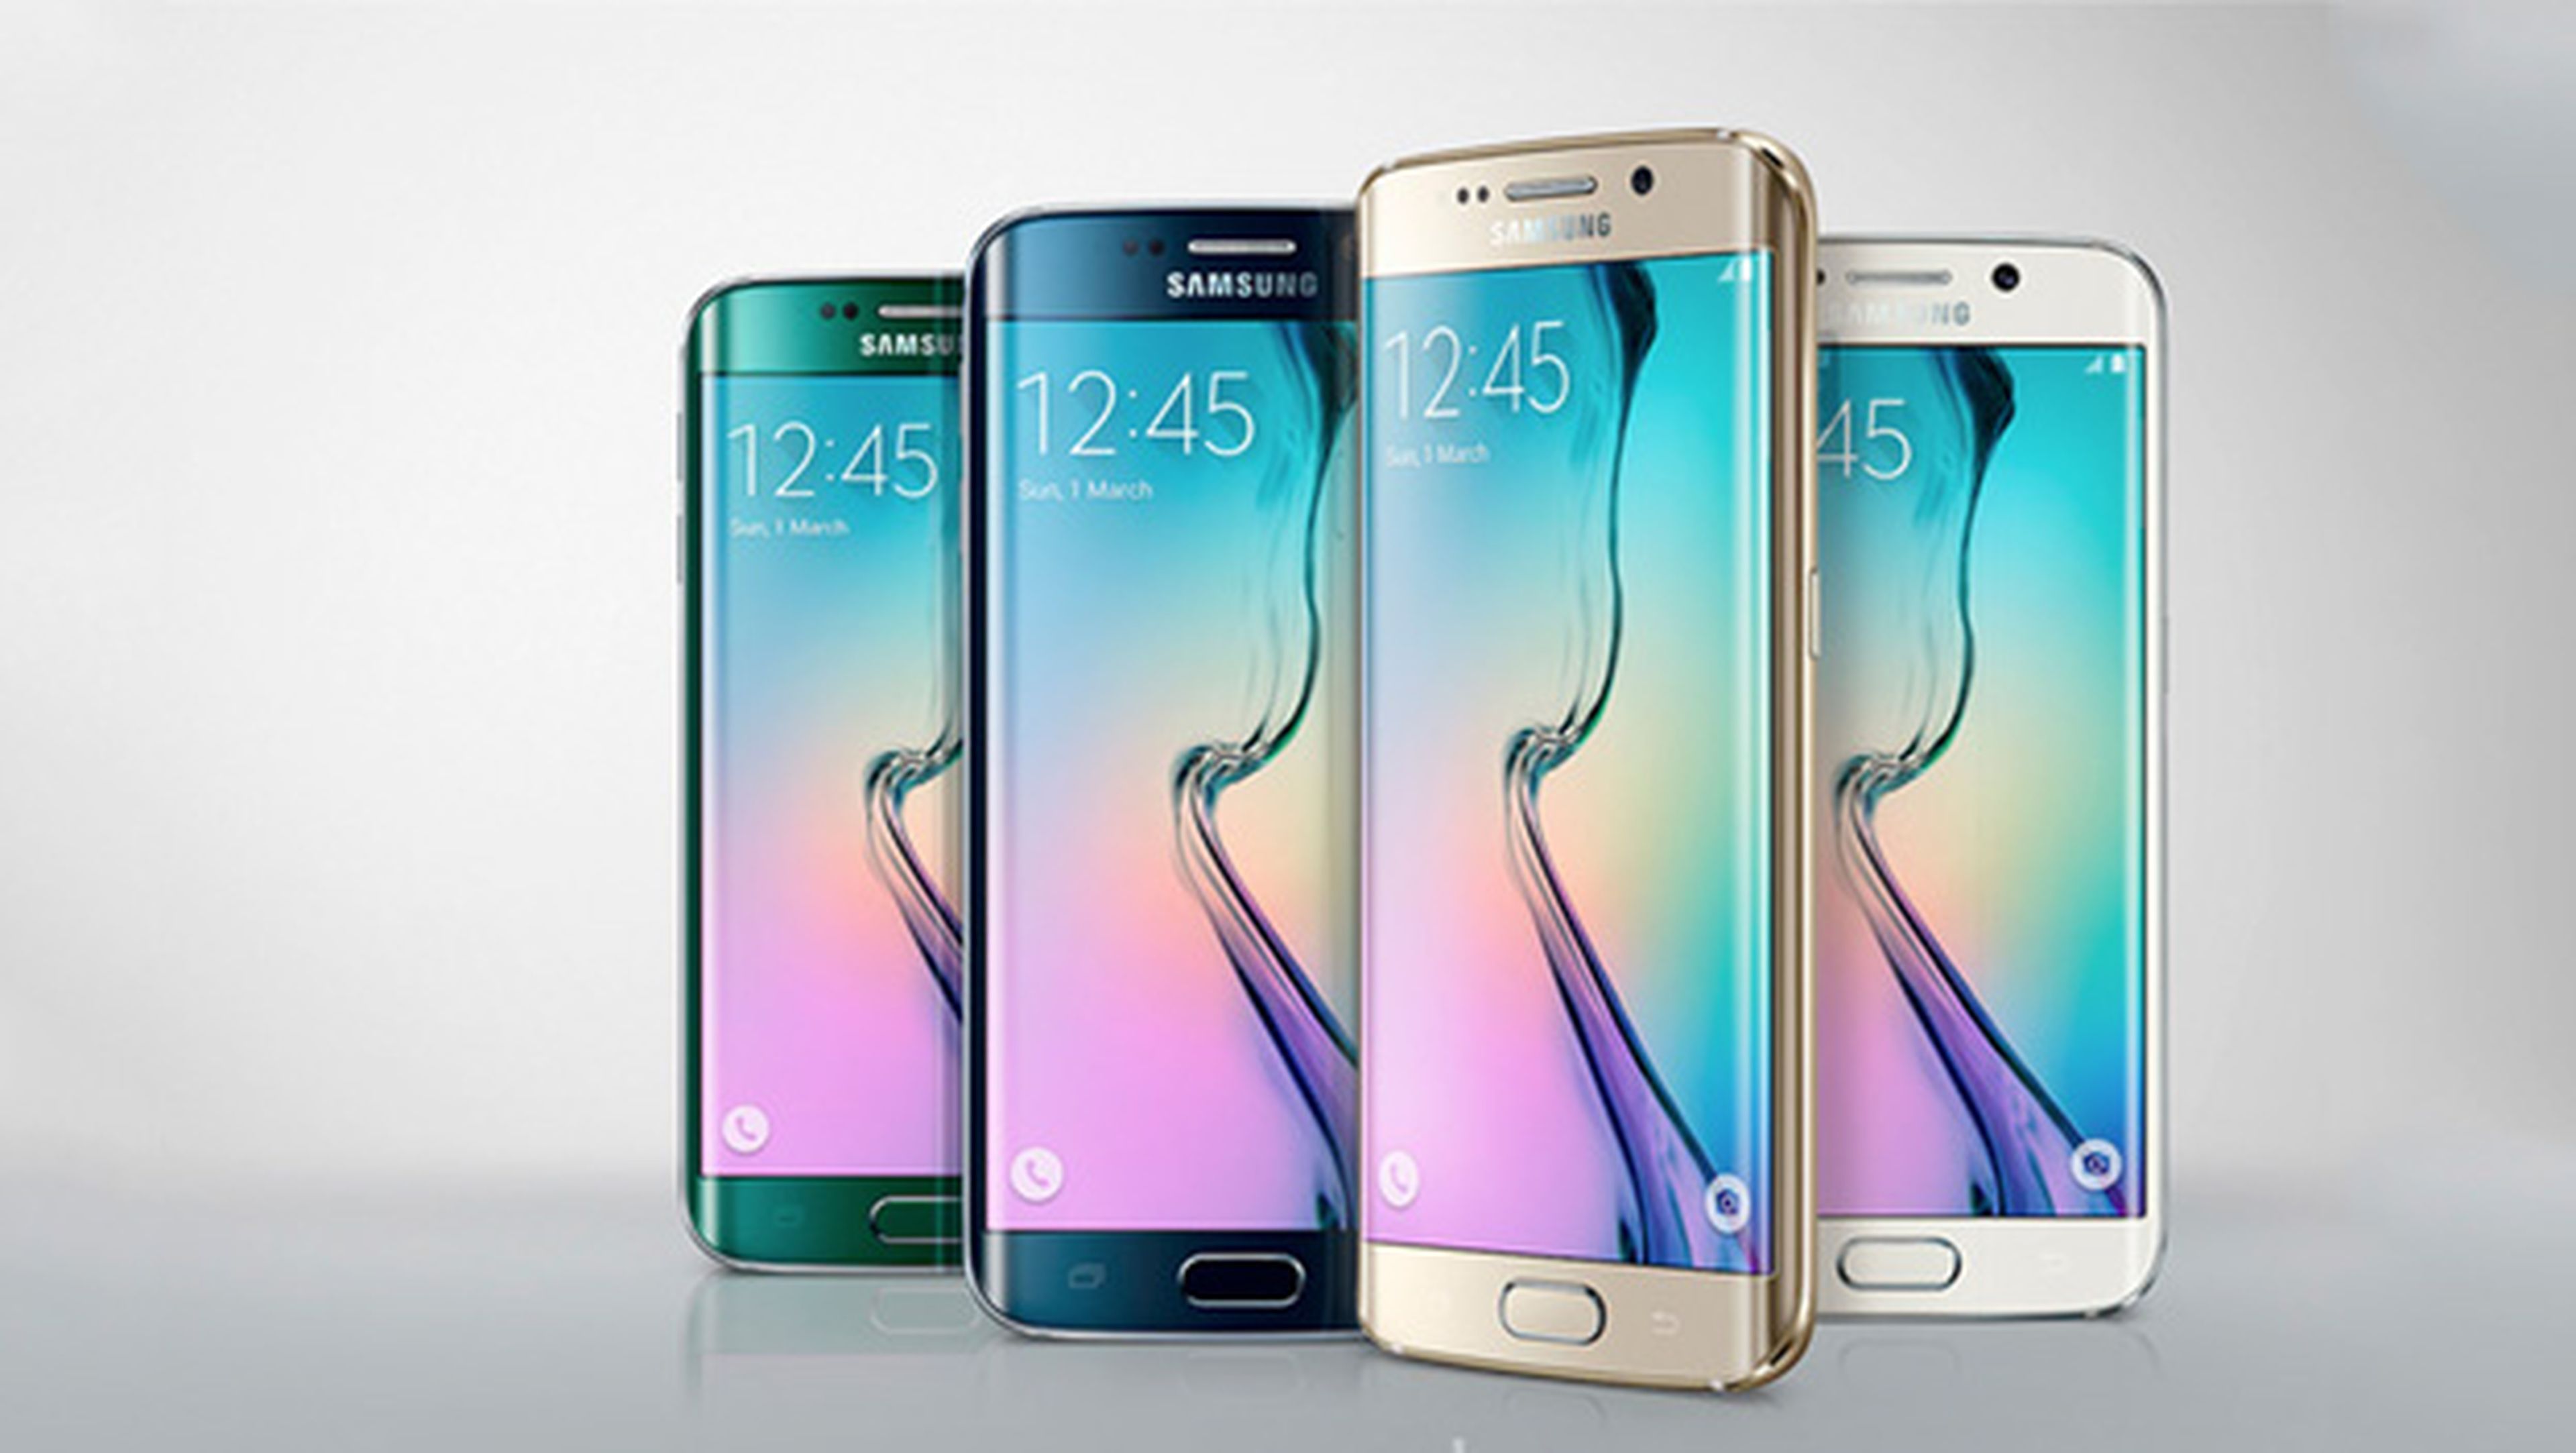 Самсунг новый недорого. Samsung s6. Samsung g925f Galaxy s6 Edge. Samsung Galaxy (SM-g925) s6 Edge. Samsung s6 2016.